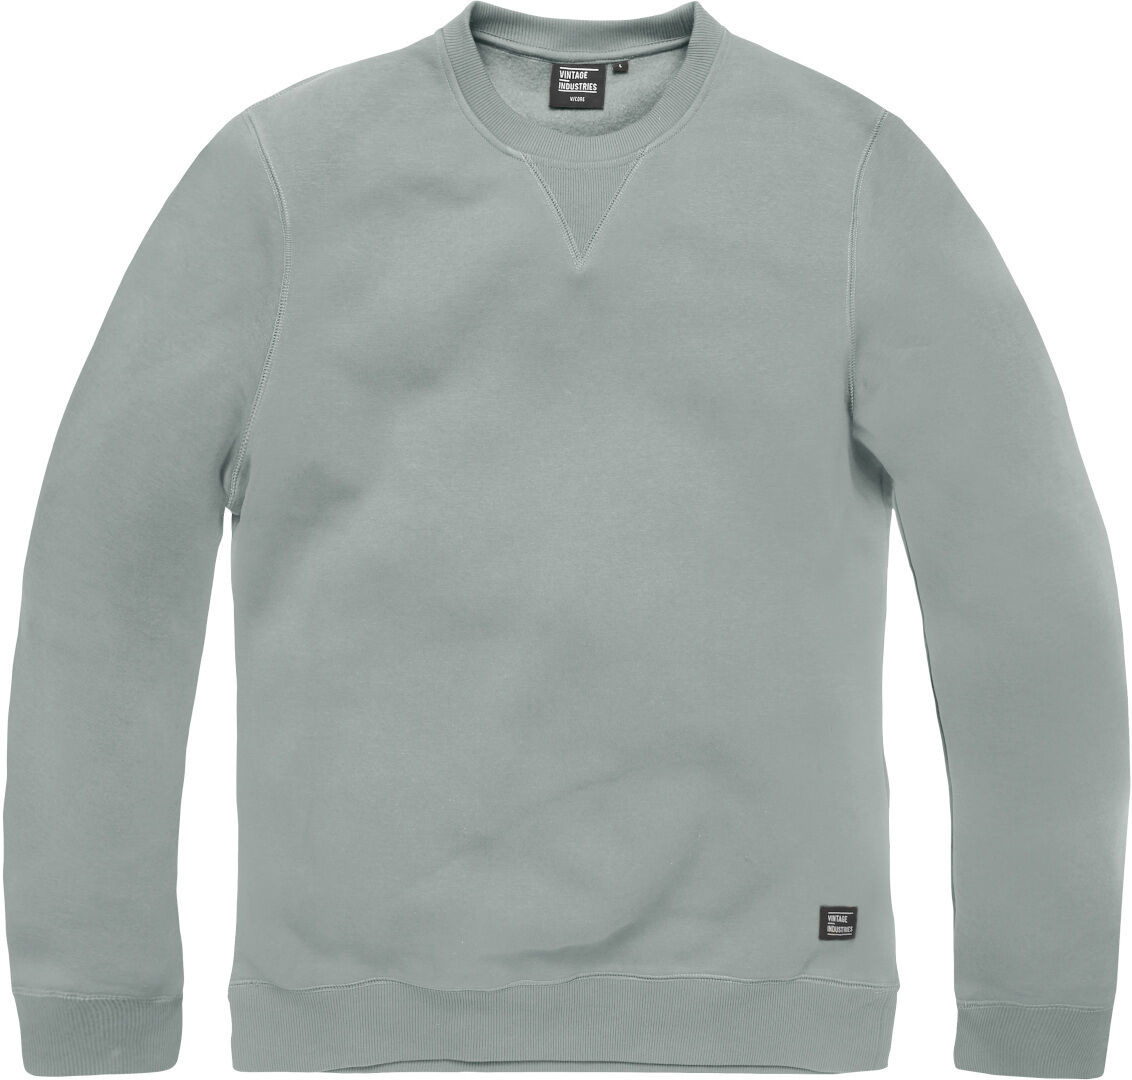 Vintage Industries Greeley Crewneck Sweatshirt 3XL Grau